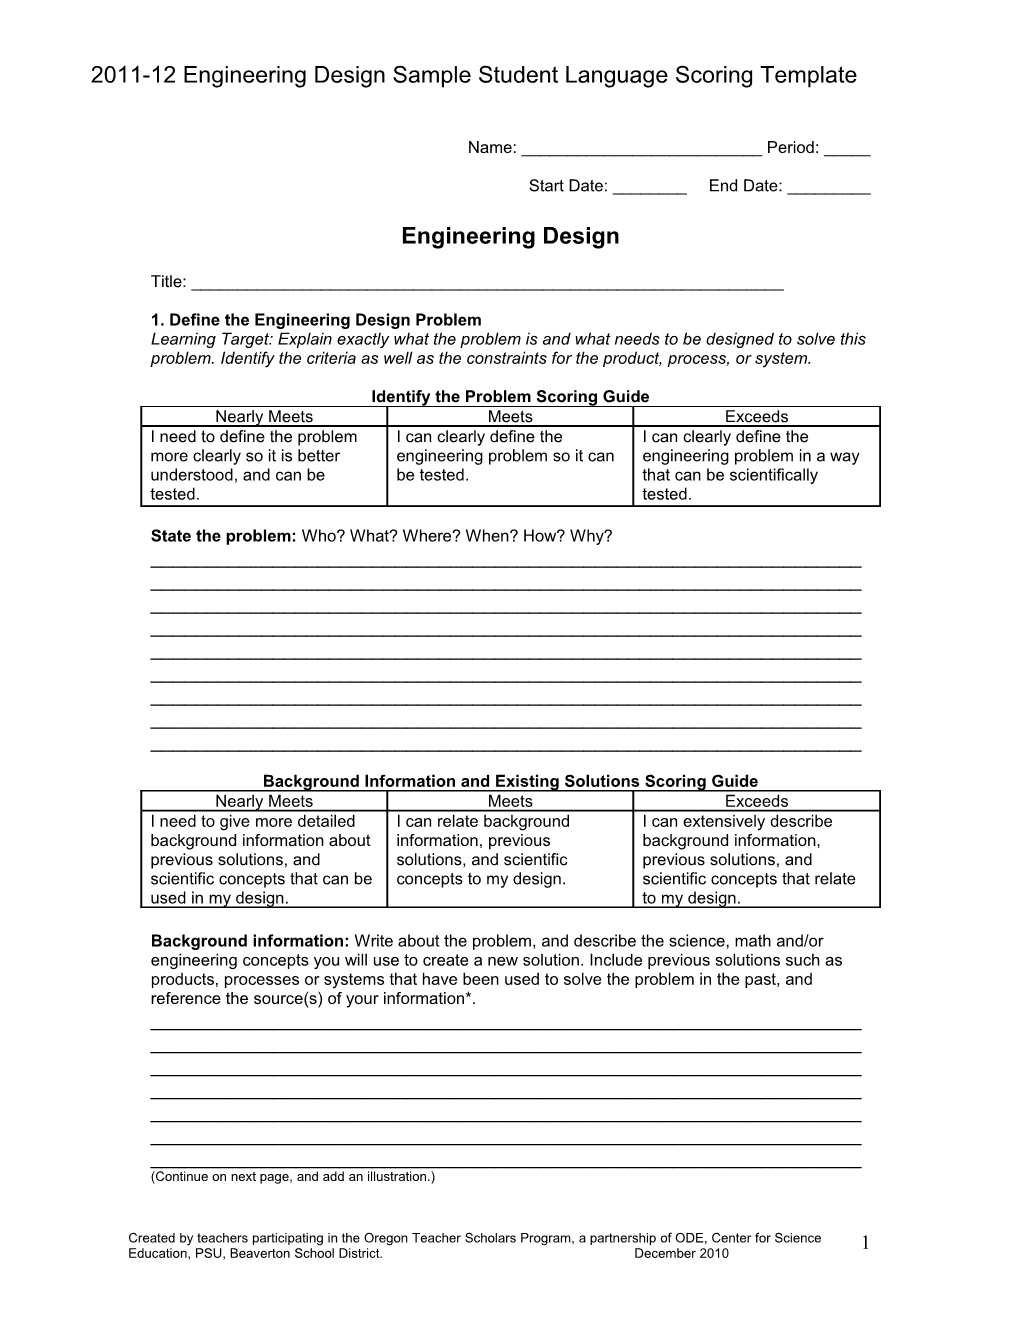 2011-12 Engineering Design Sample Student Language Scoring Template